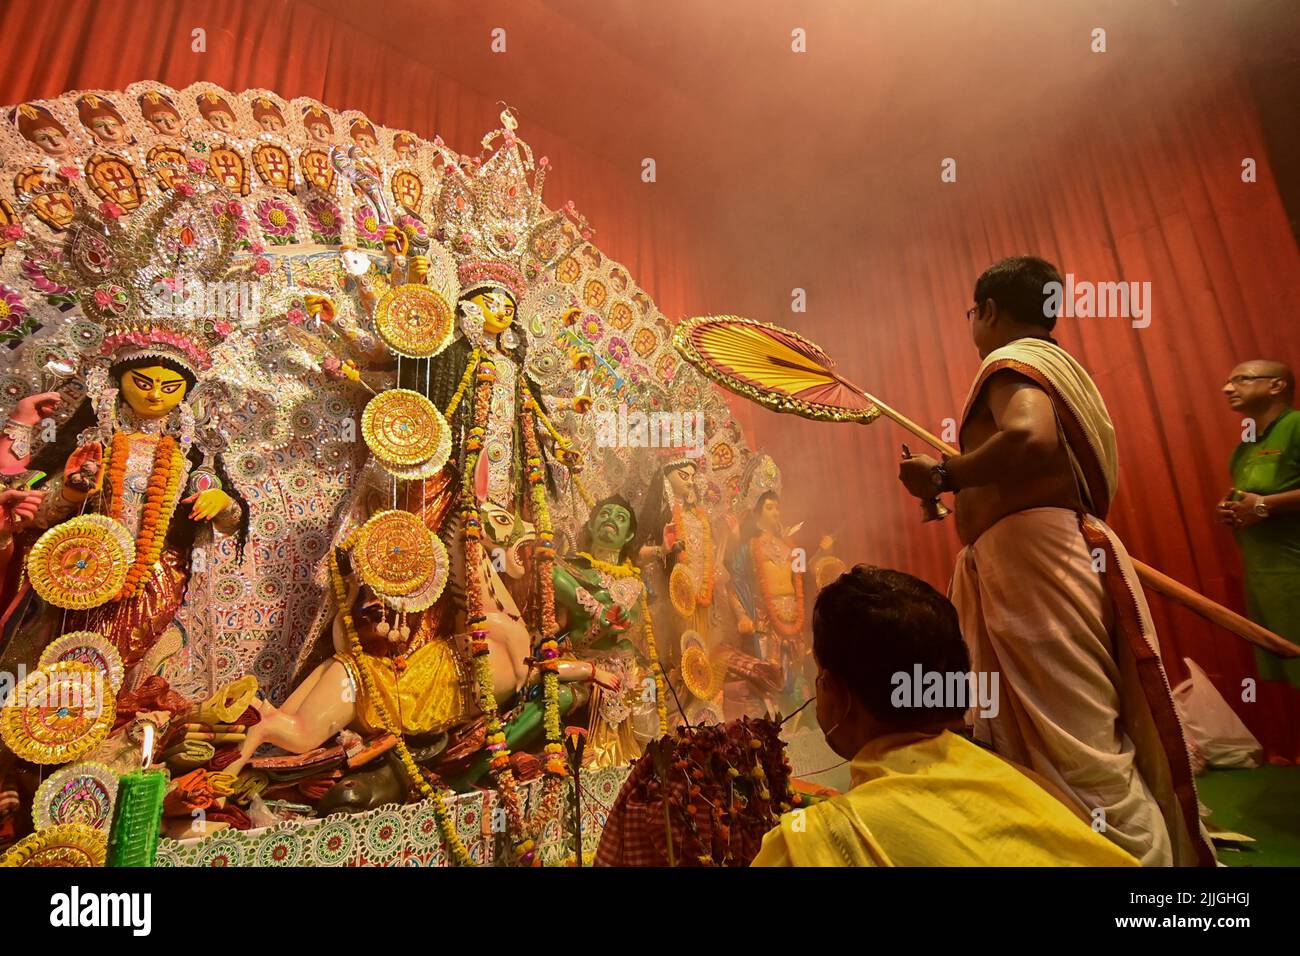 Howrah, India -October 13, 2021 : Hindu Priest worshipping Goddess Durga with ghanta and hand fan. Ashtami puja aarati - sacred Durga Puja ritual - sh Stock Photo